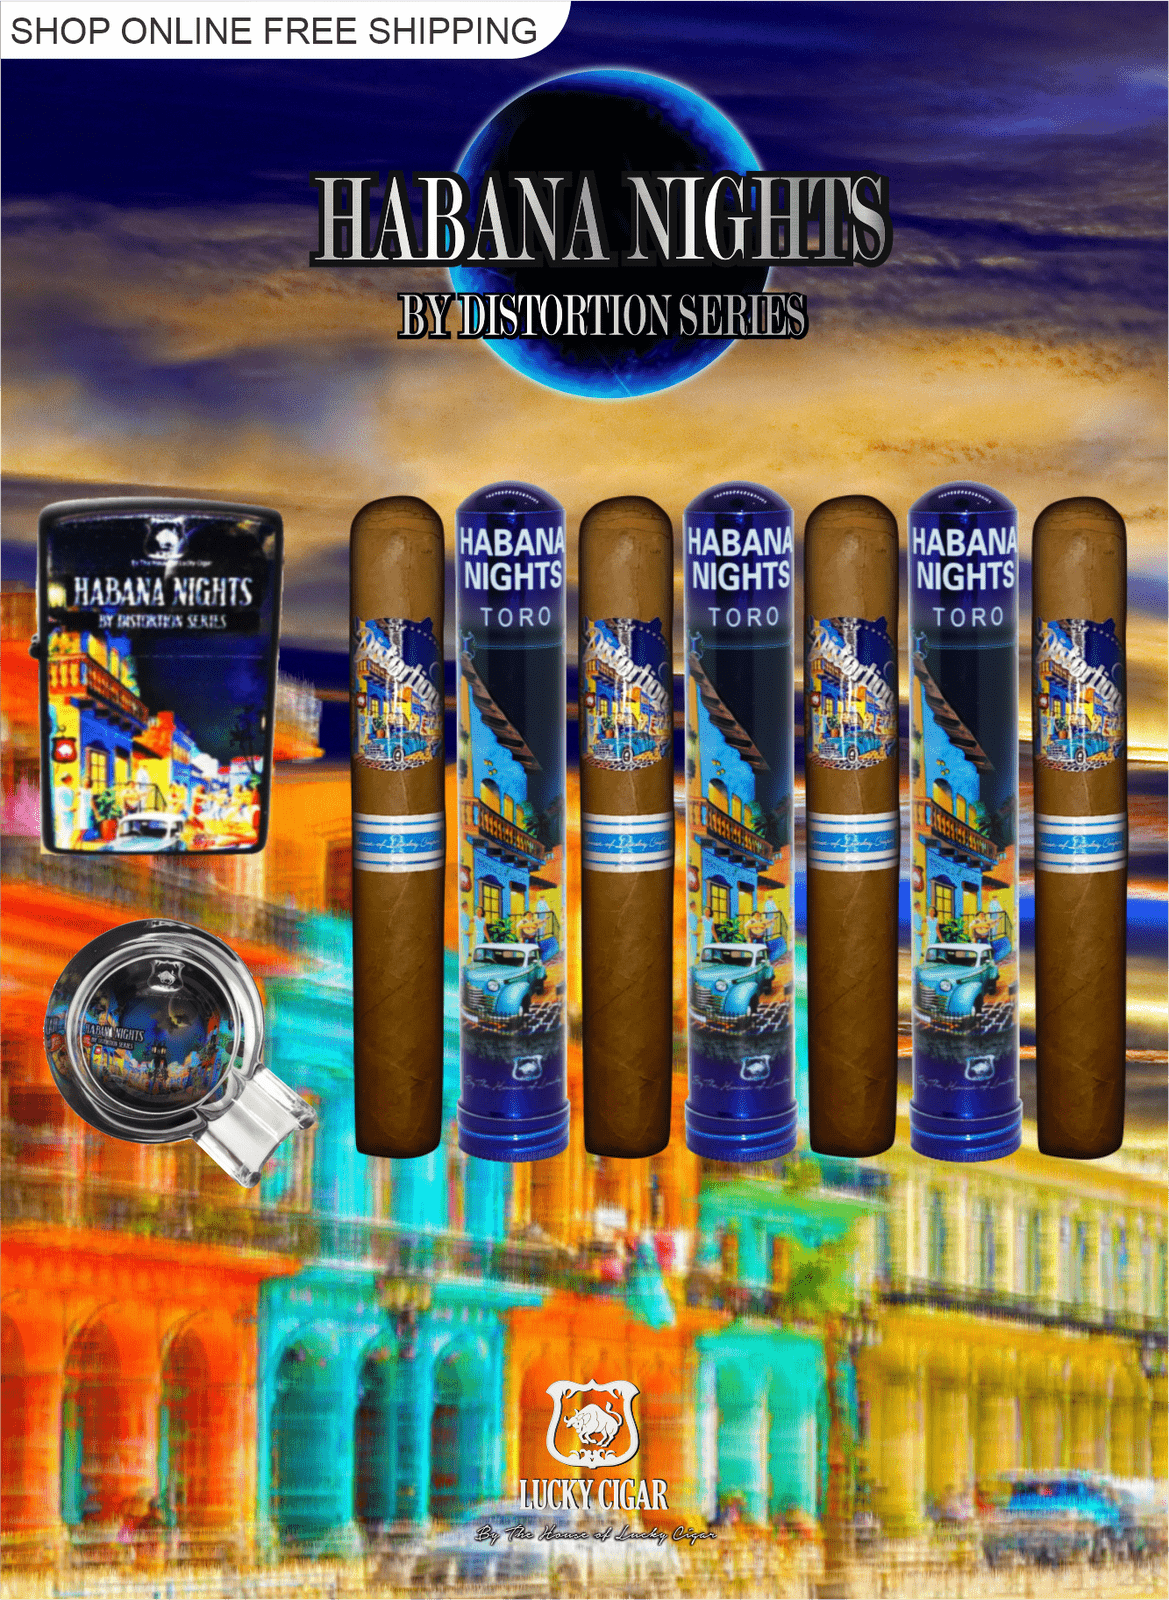 Habana Nights Aficionado Set :